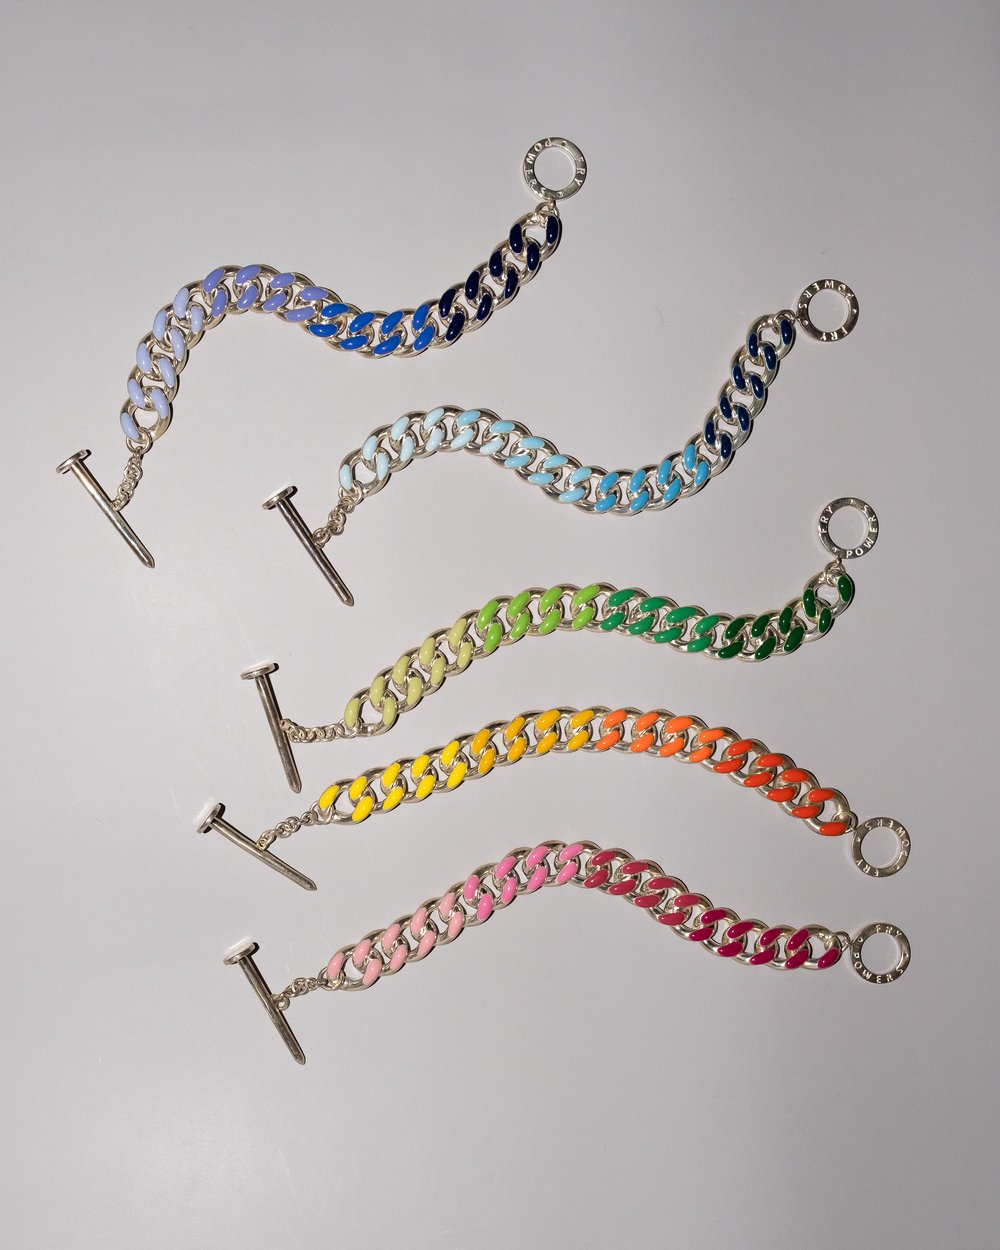 Rainbow Heart Link Chain Bracelet – Purple Cow Toys